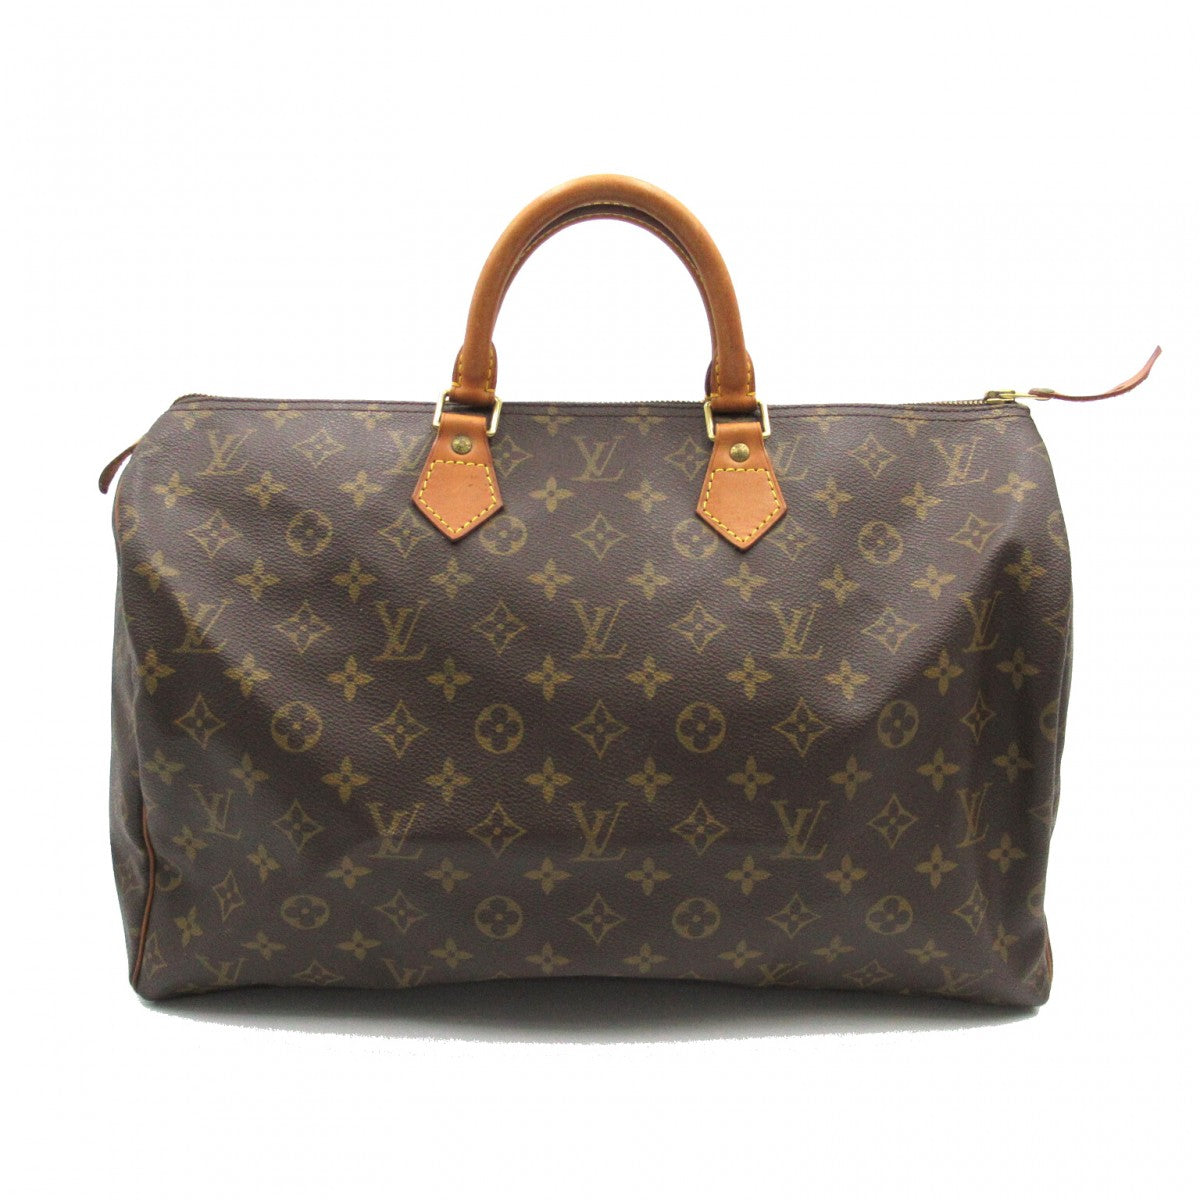 LOUIS VUITTON Louis Vuitton Speedy 40 Handbag Monogram M41522